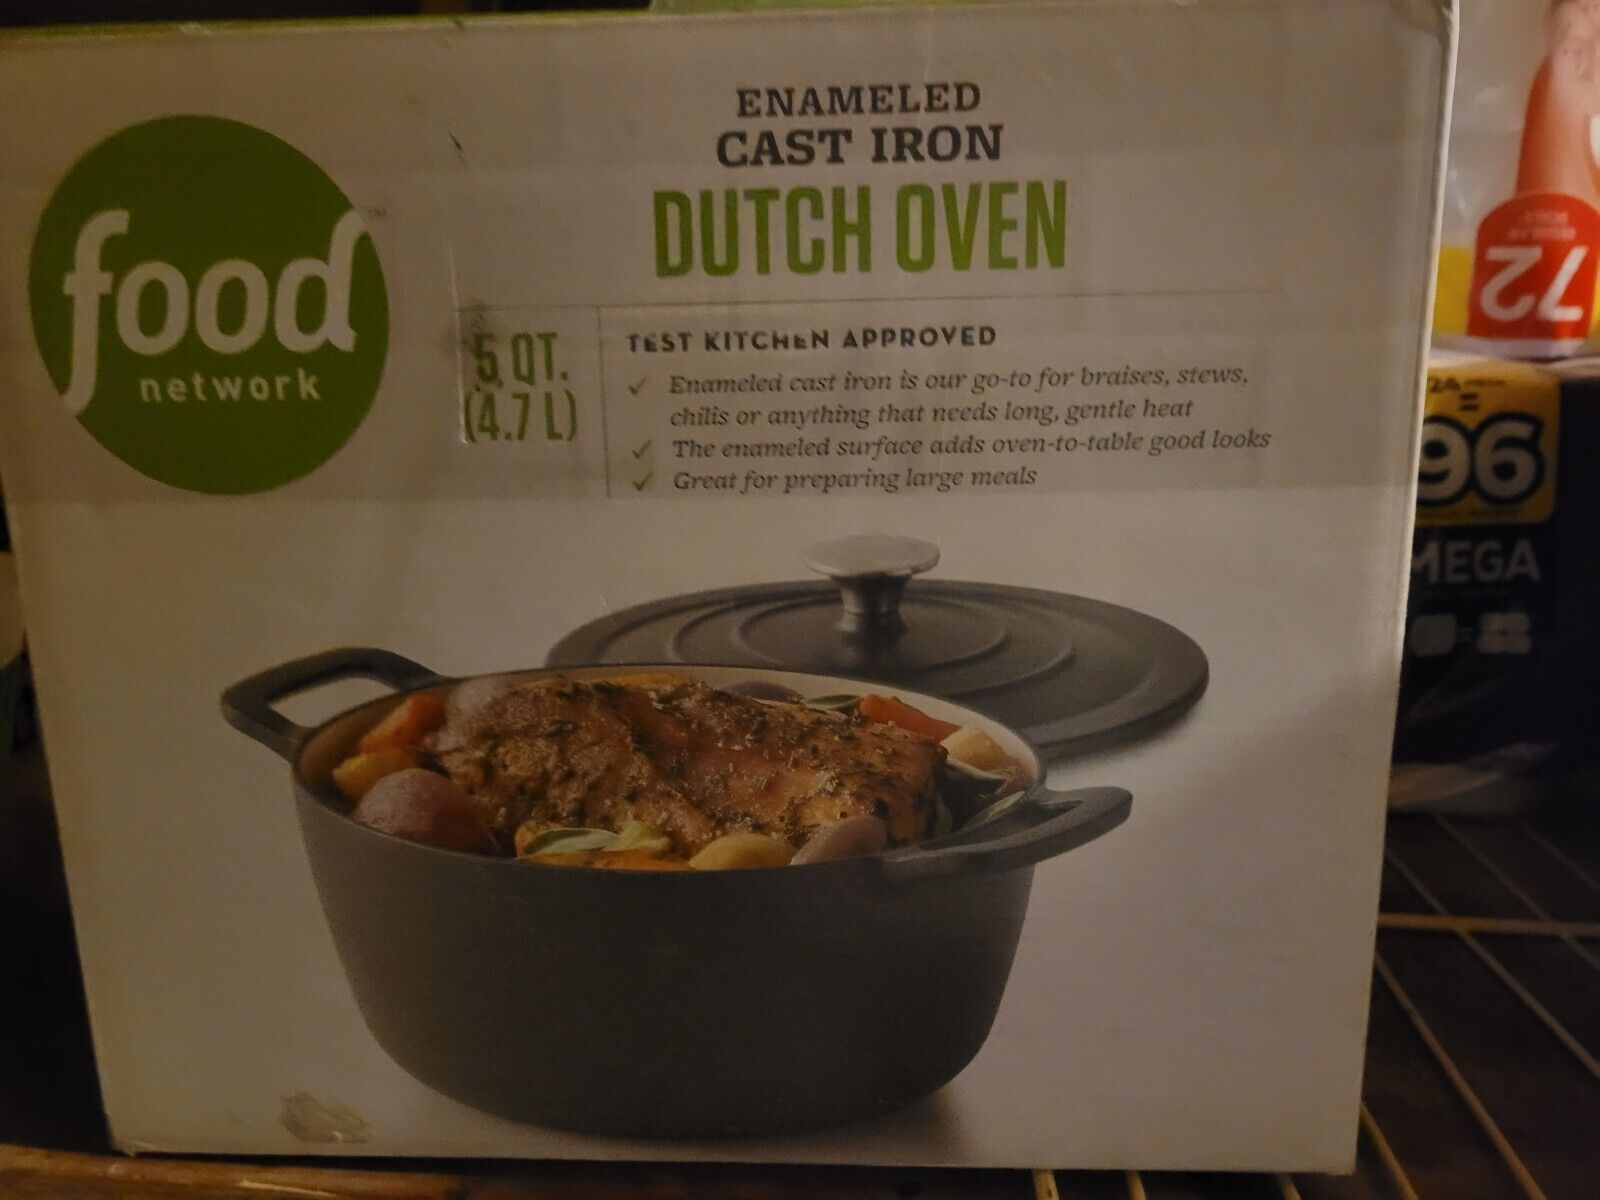 Food Network 5 qt Enamel Cast Iron Dutch Oven w/ Lid - Dark Gray - NEW